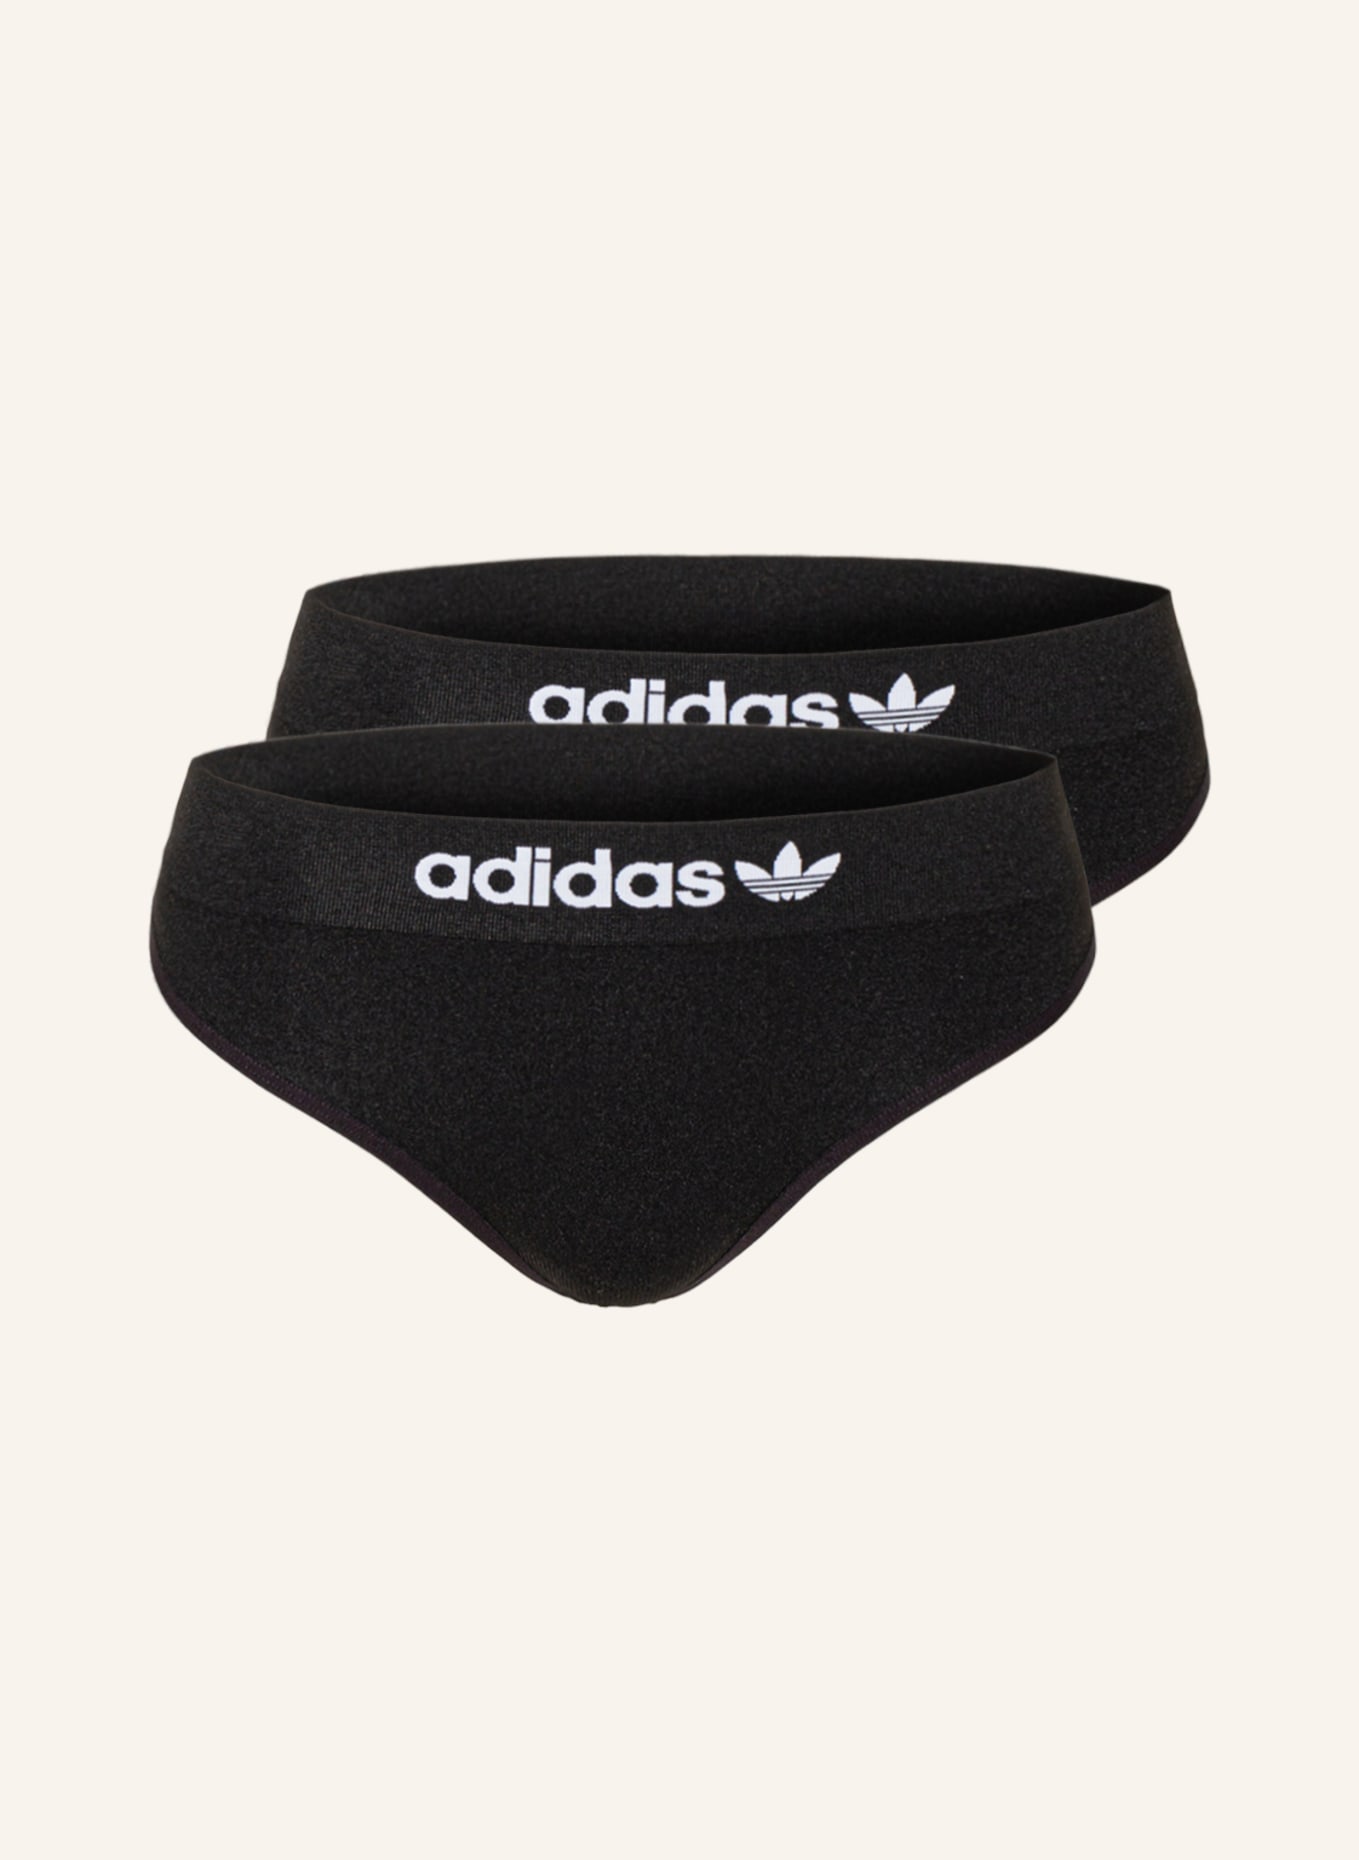 adidas Originals 2-pack thongs in black